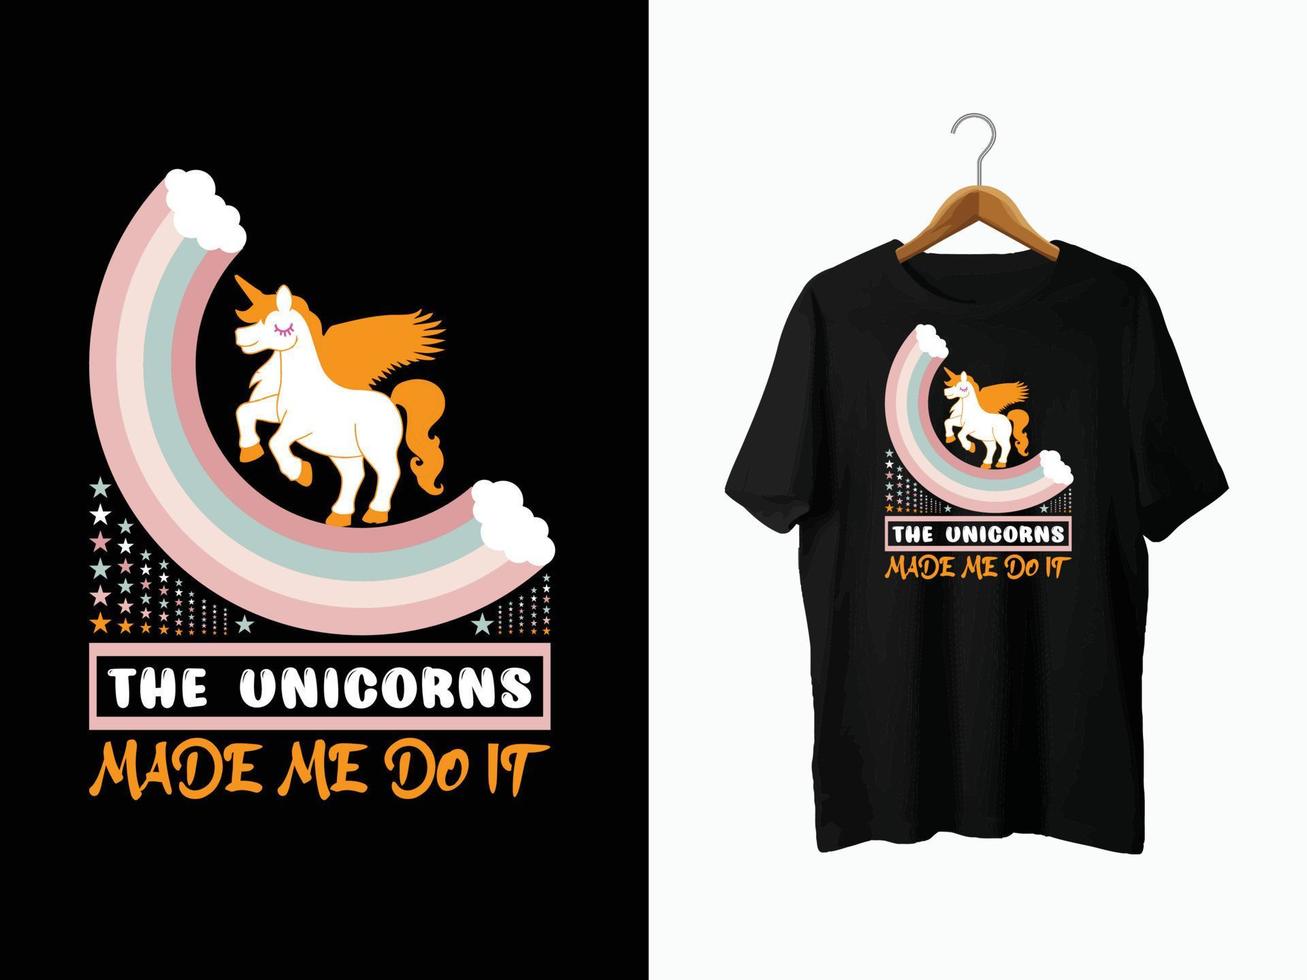 unicorn t-shirt design vektor